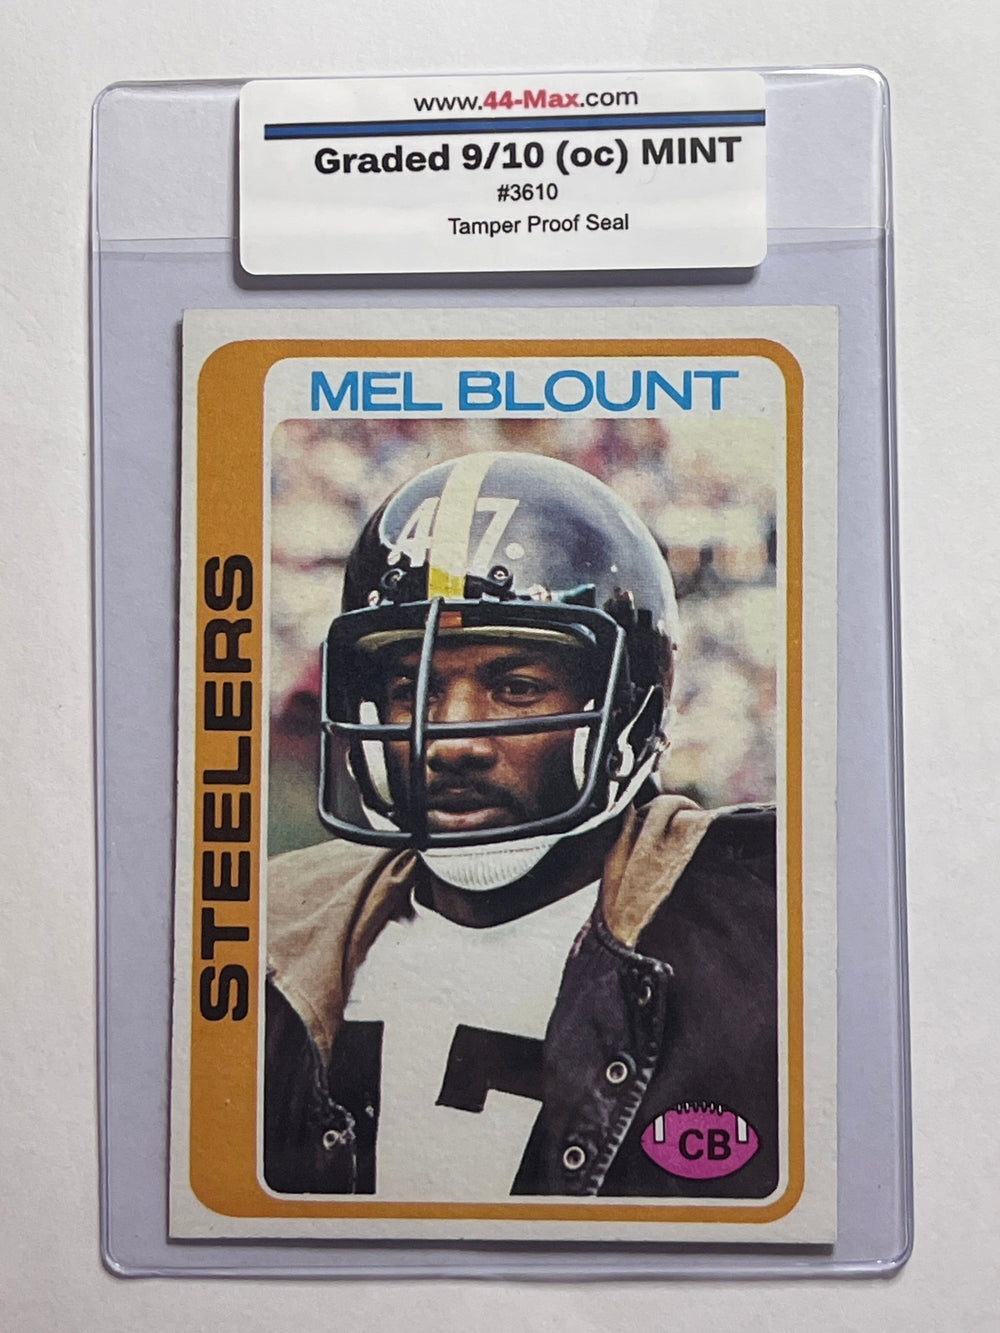 Mel Blount 1978 Topps Football Card. 44-Max 9/10 (oc) Mint #3610